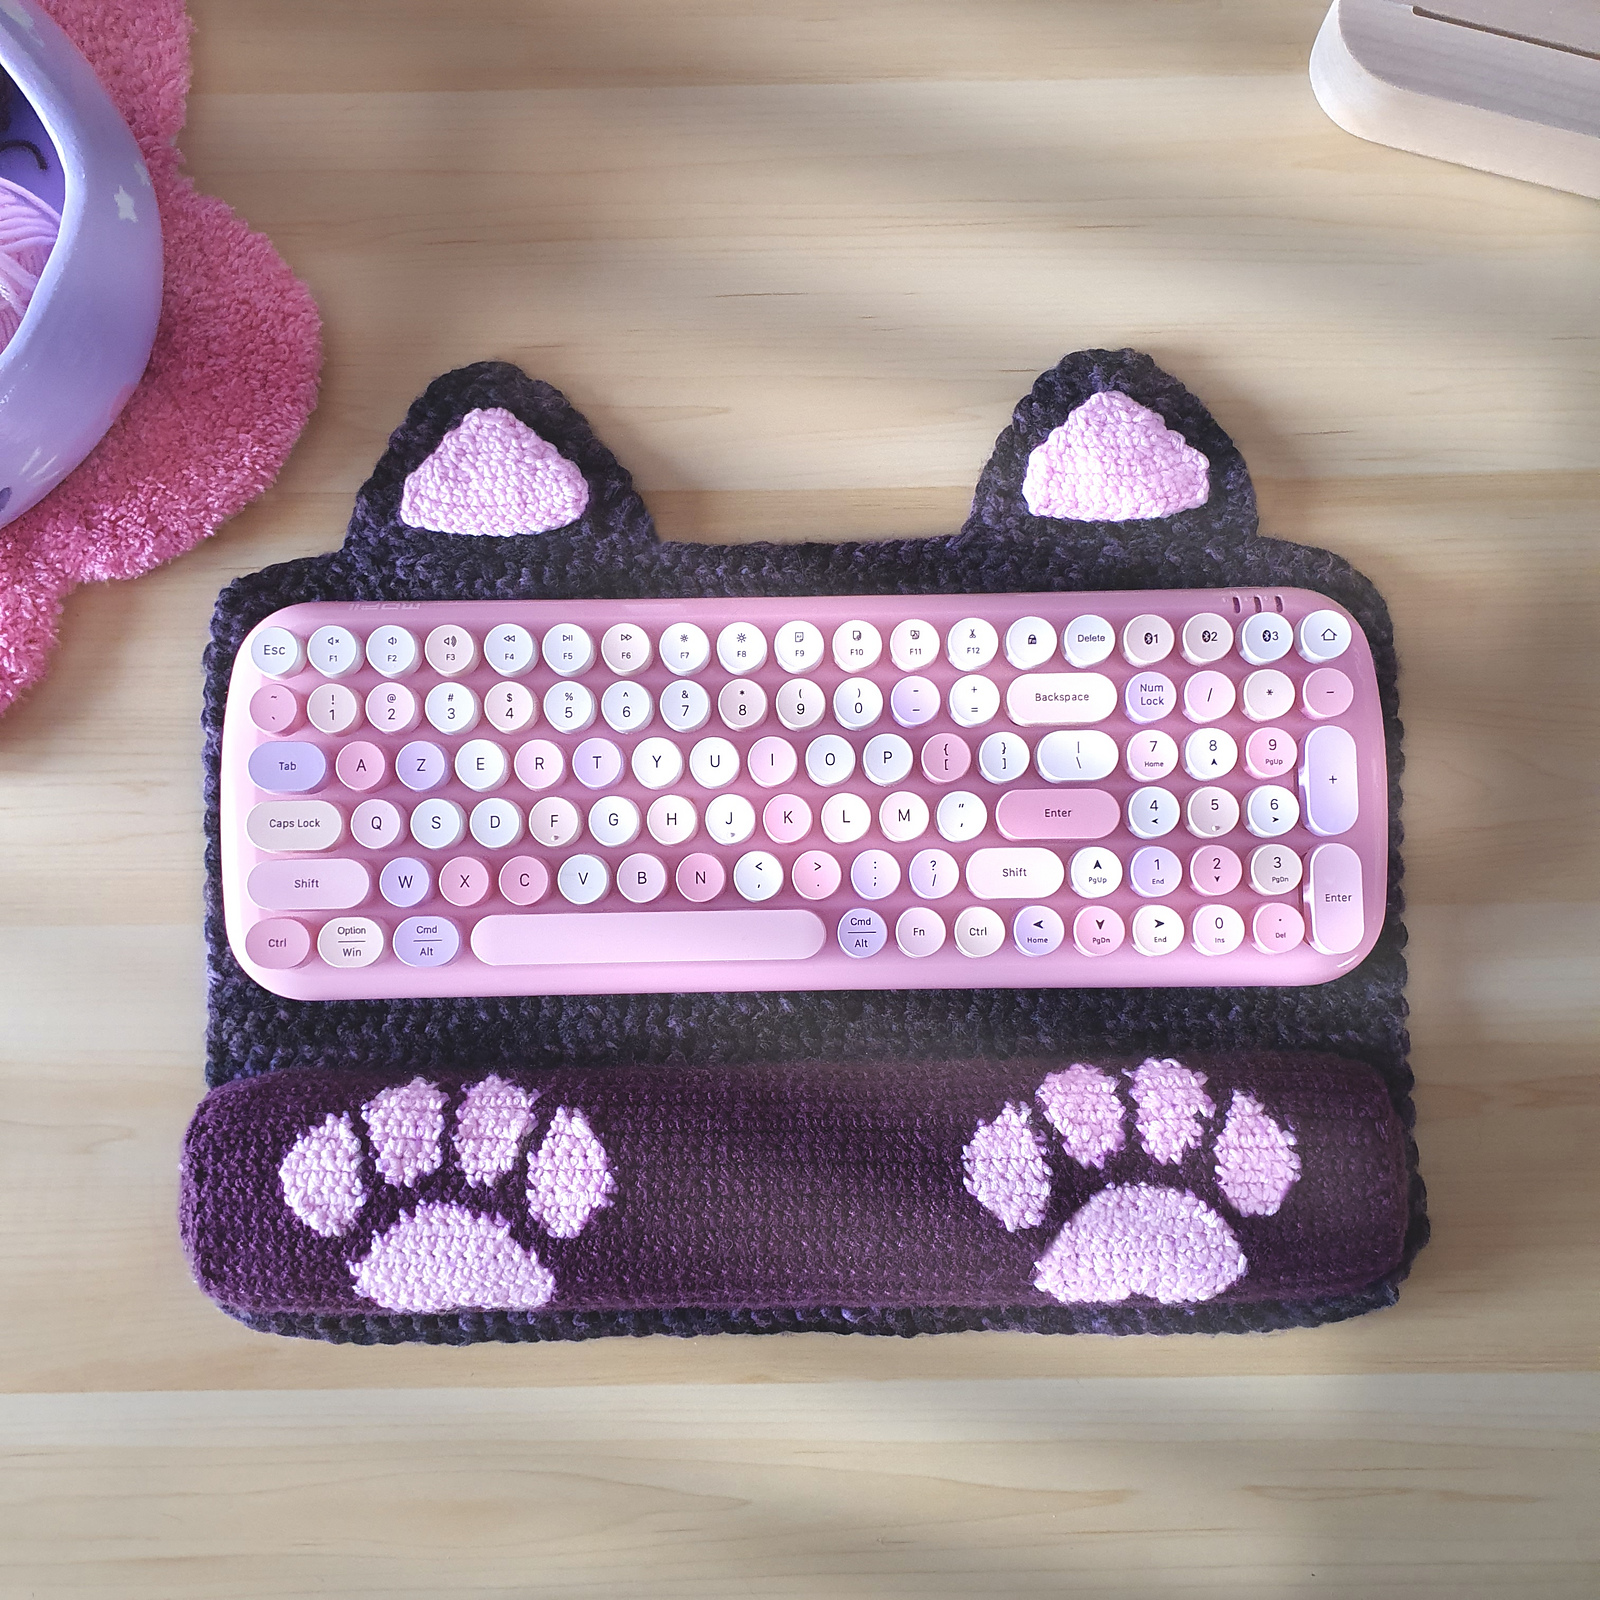 Crochet a Kitty Keyboard Mat Wrist Rest Designed By Delilah Crochet ... Purrrrfect Gift Alert!